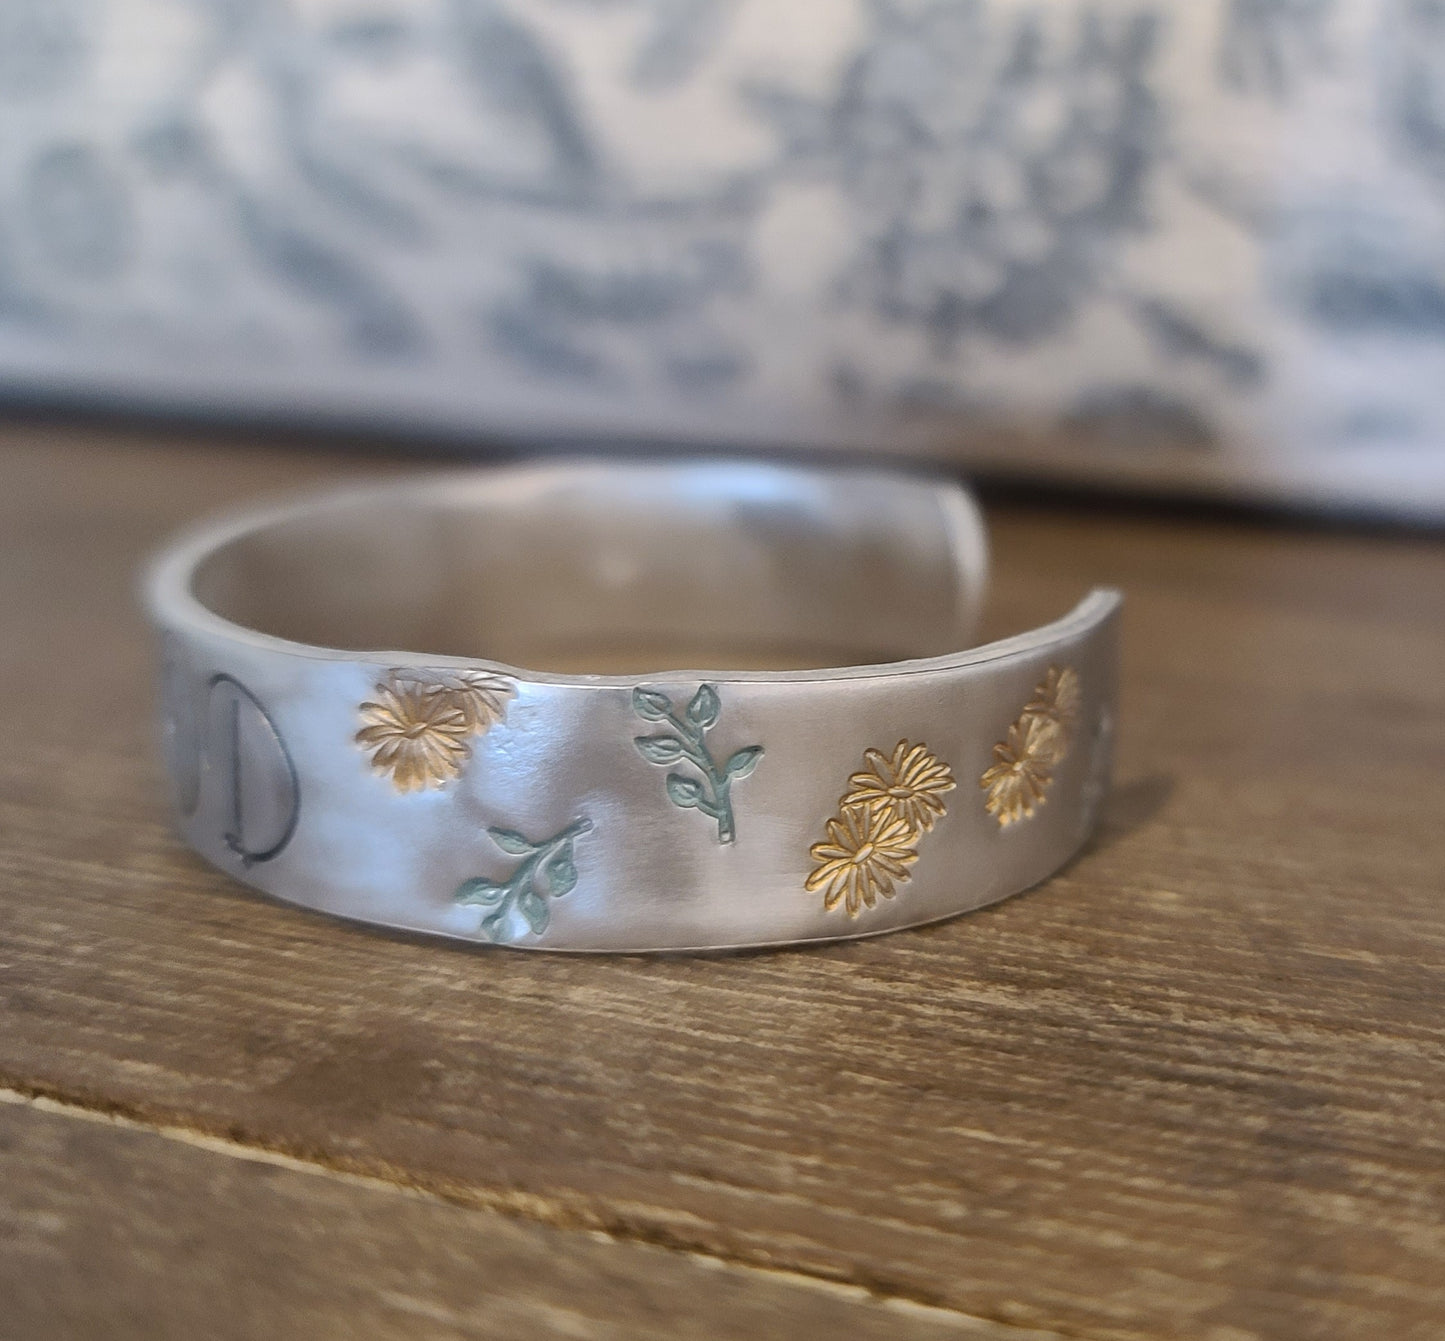 Hand Stamped "But God" Aluminum Cuff Bracelet | Flower Motif